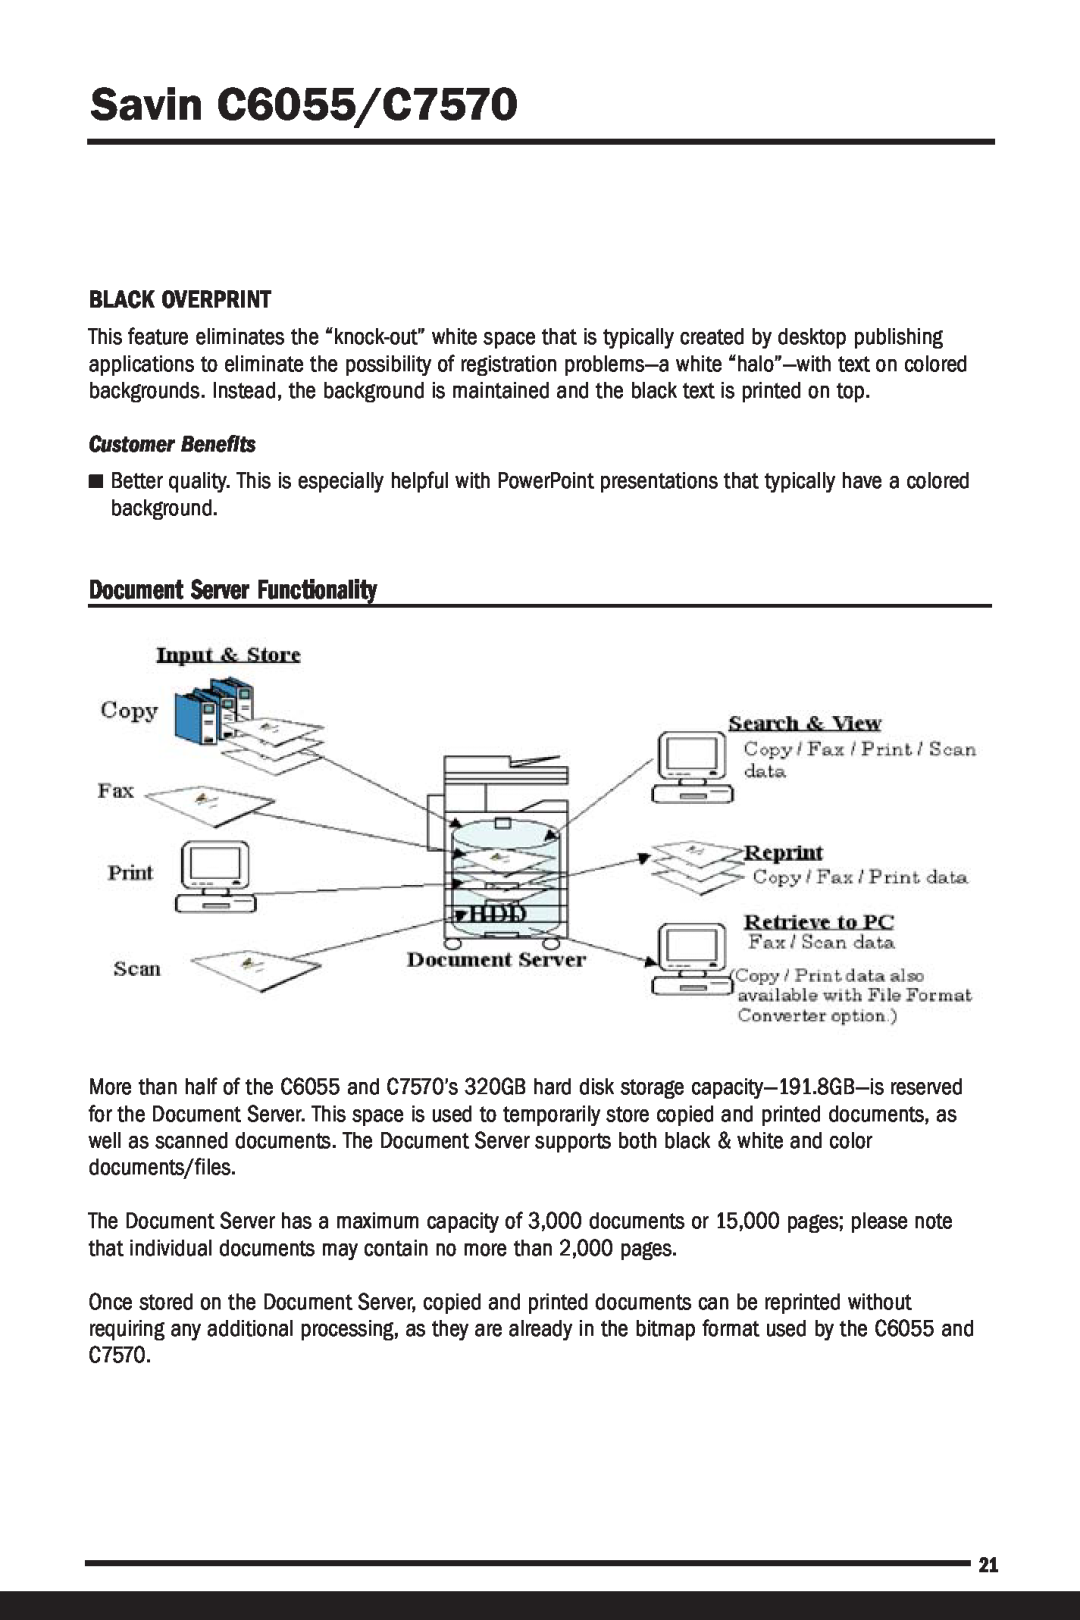 Savin manual Document Server Functionality, Black Overprint, Savin C6055/C7570, Customer Benefits 